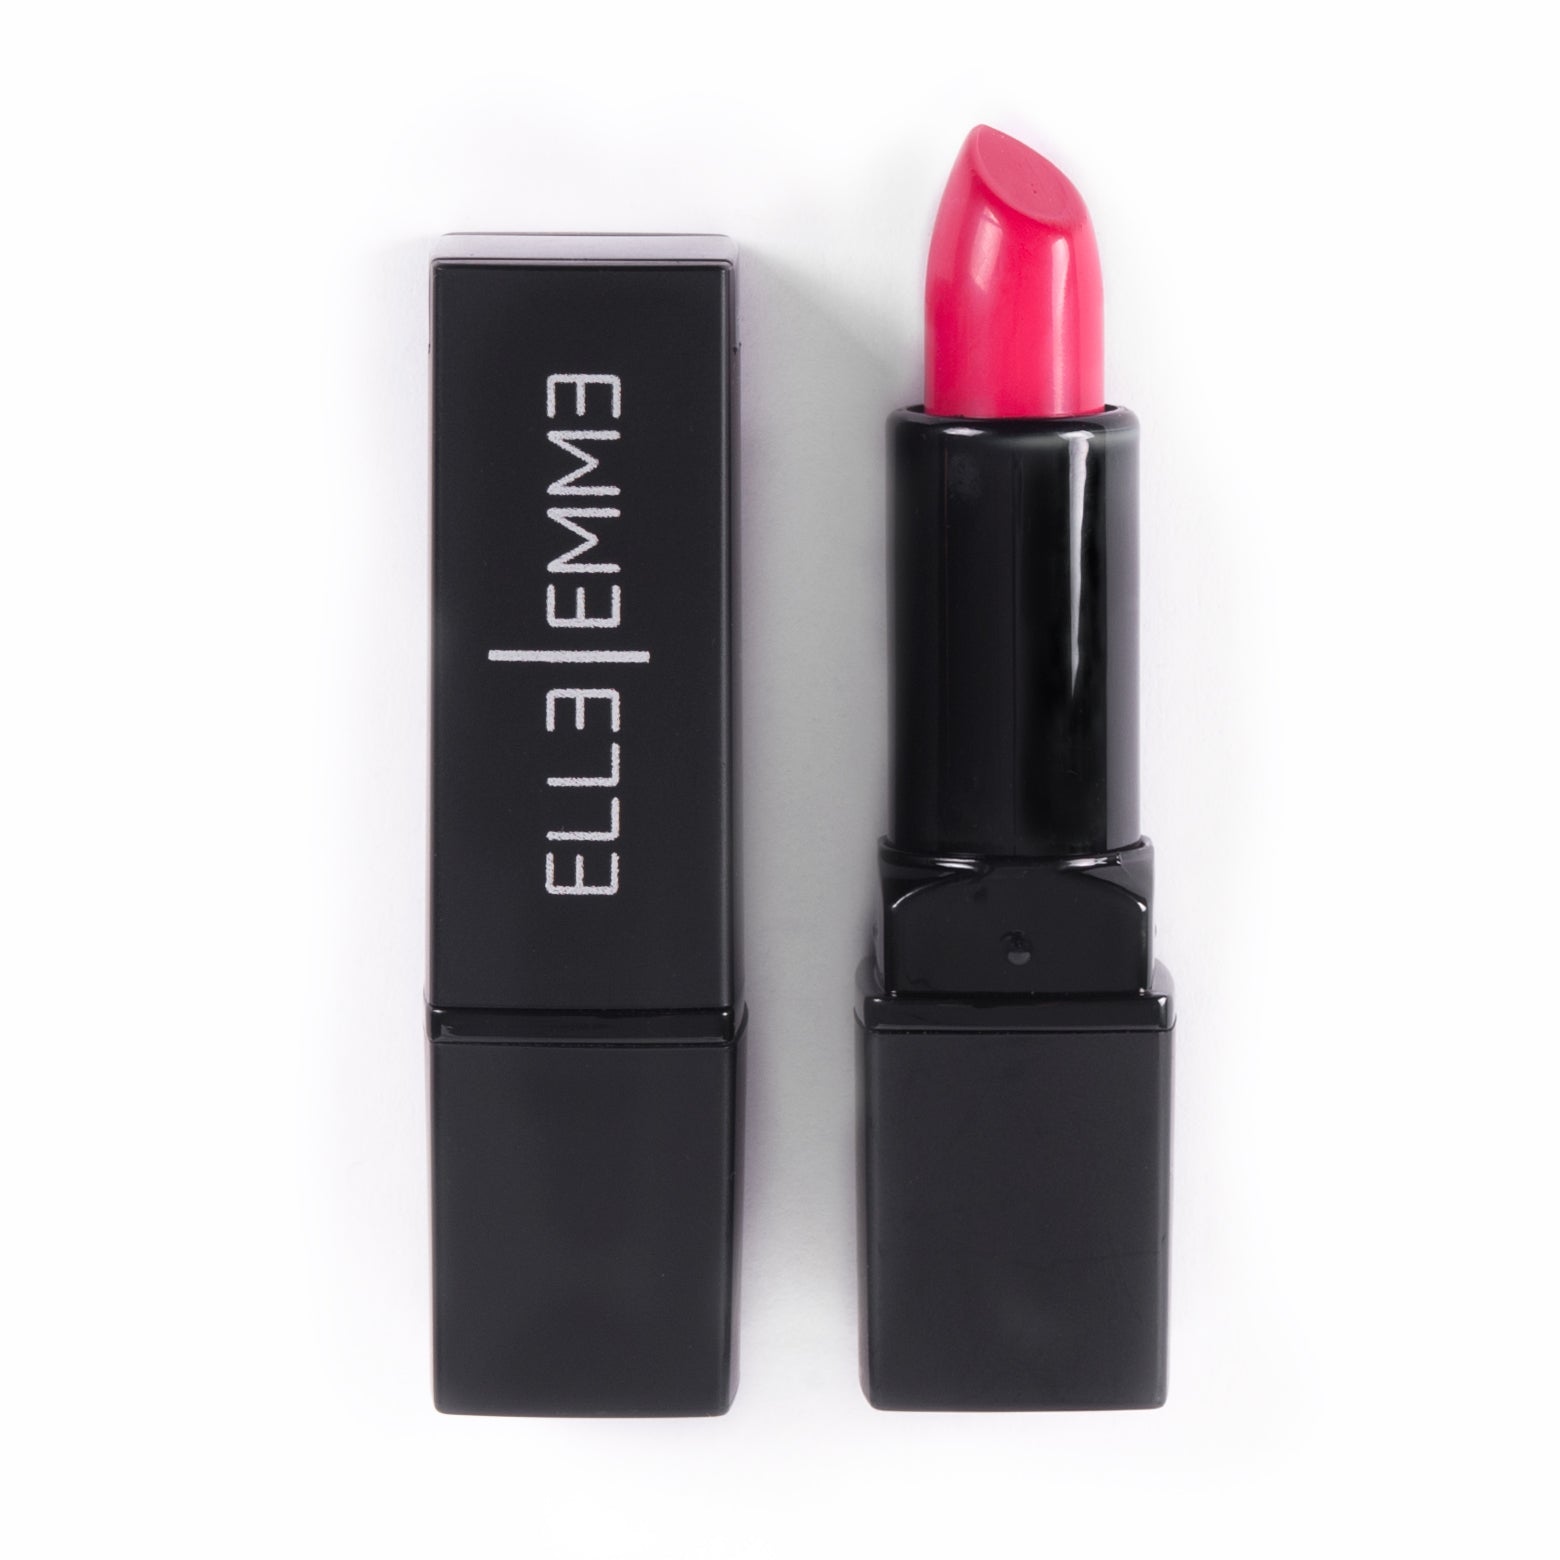 Pinky red lipstick